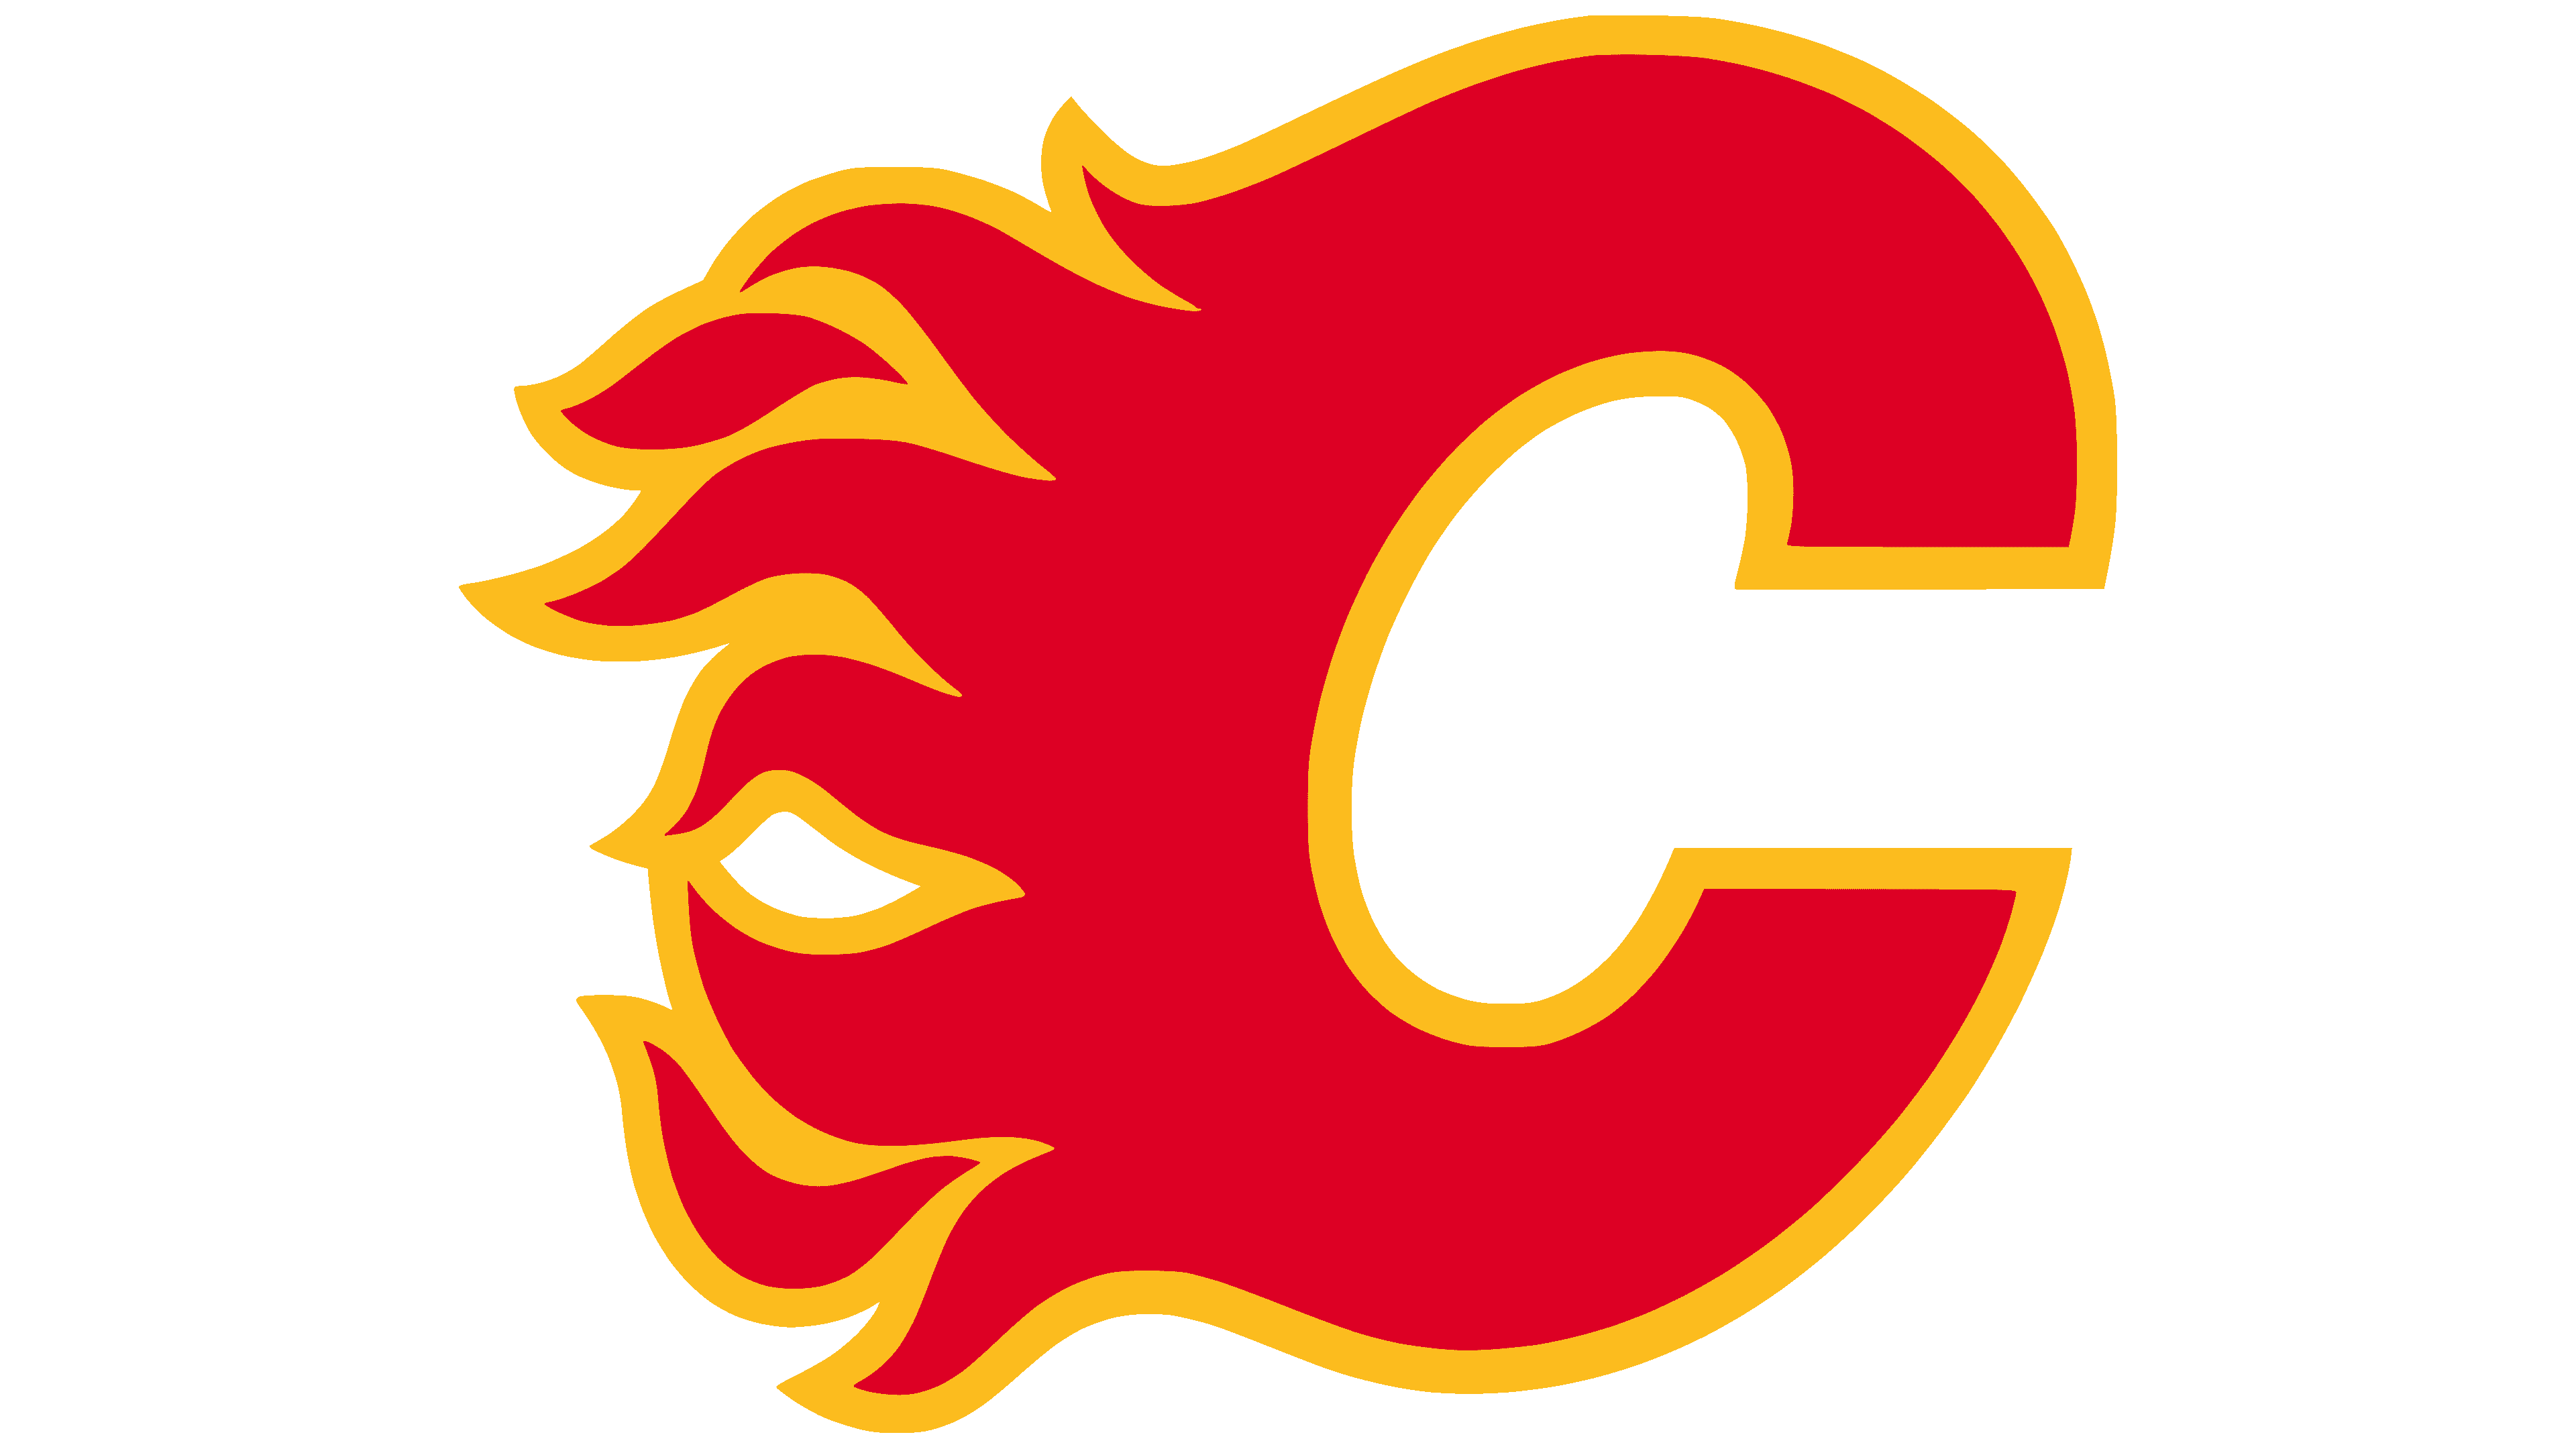 Calgary Flames PNG Free File Download